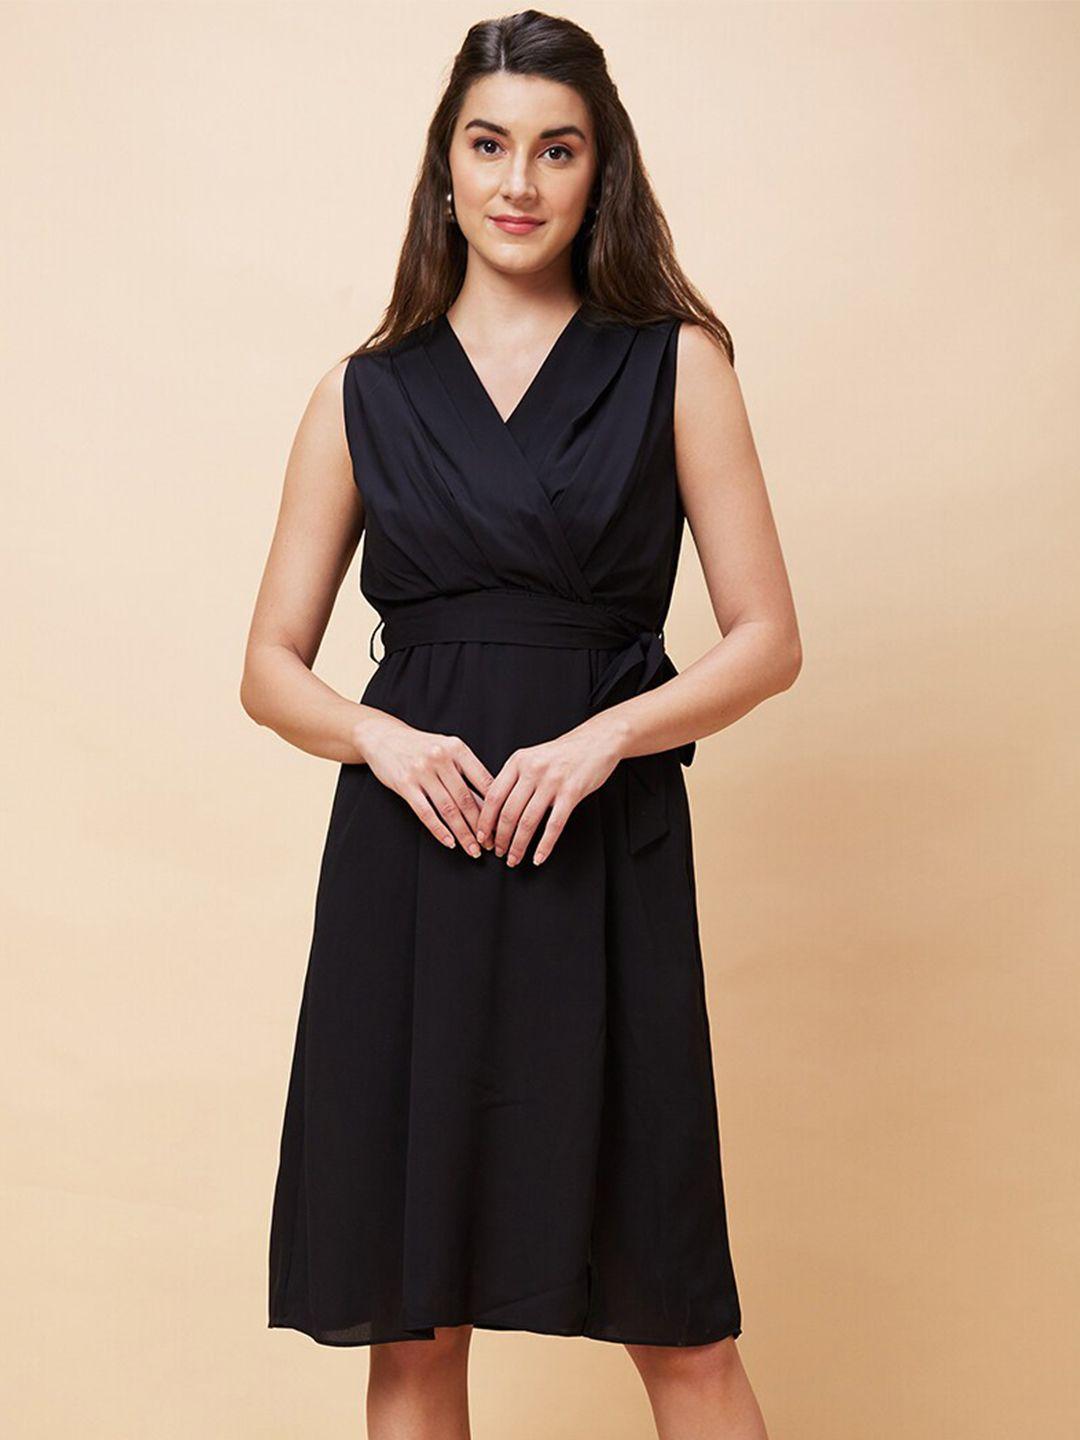 globus black v-neck sleeveless belted fit & flare dress